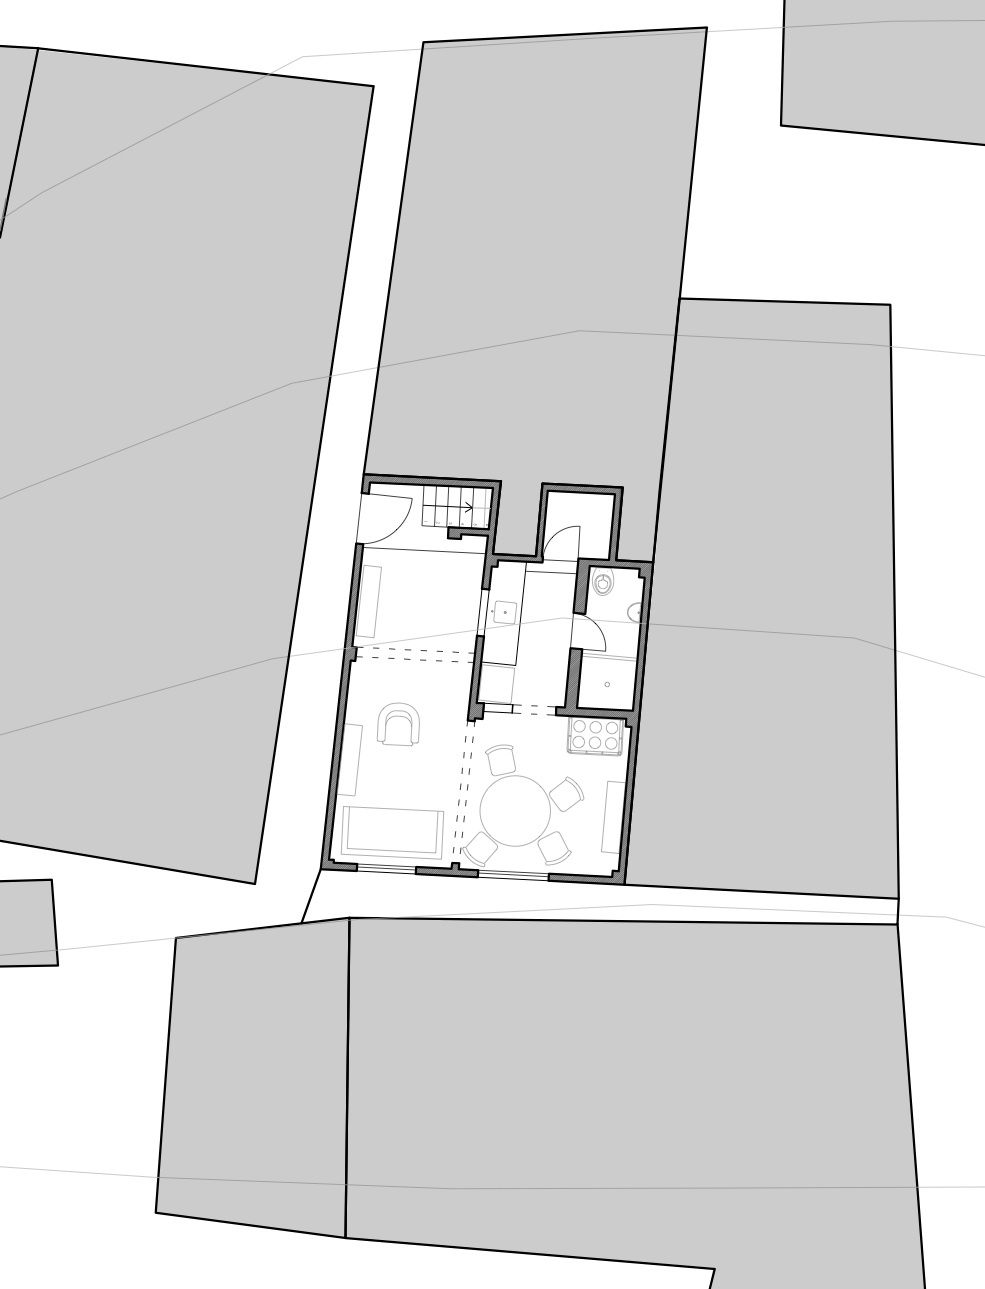 favela house plan.jpg